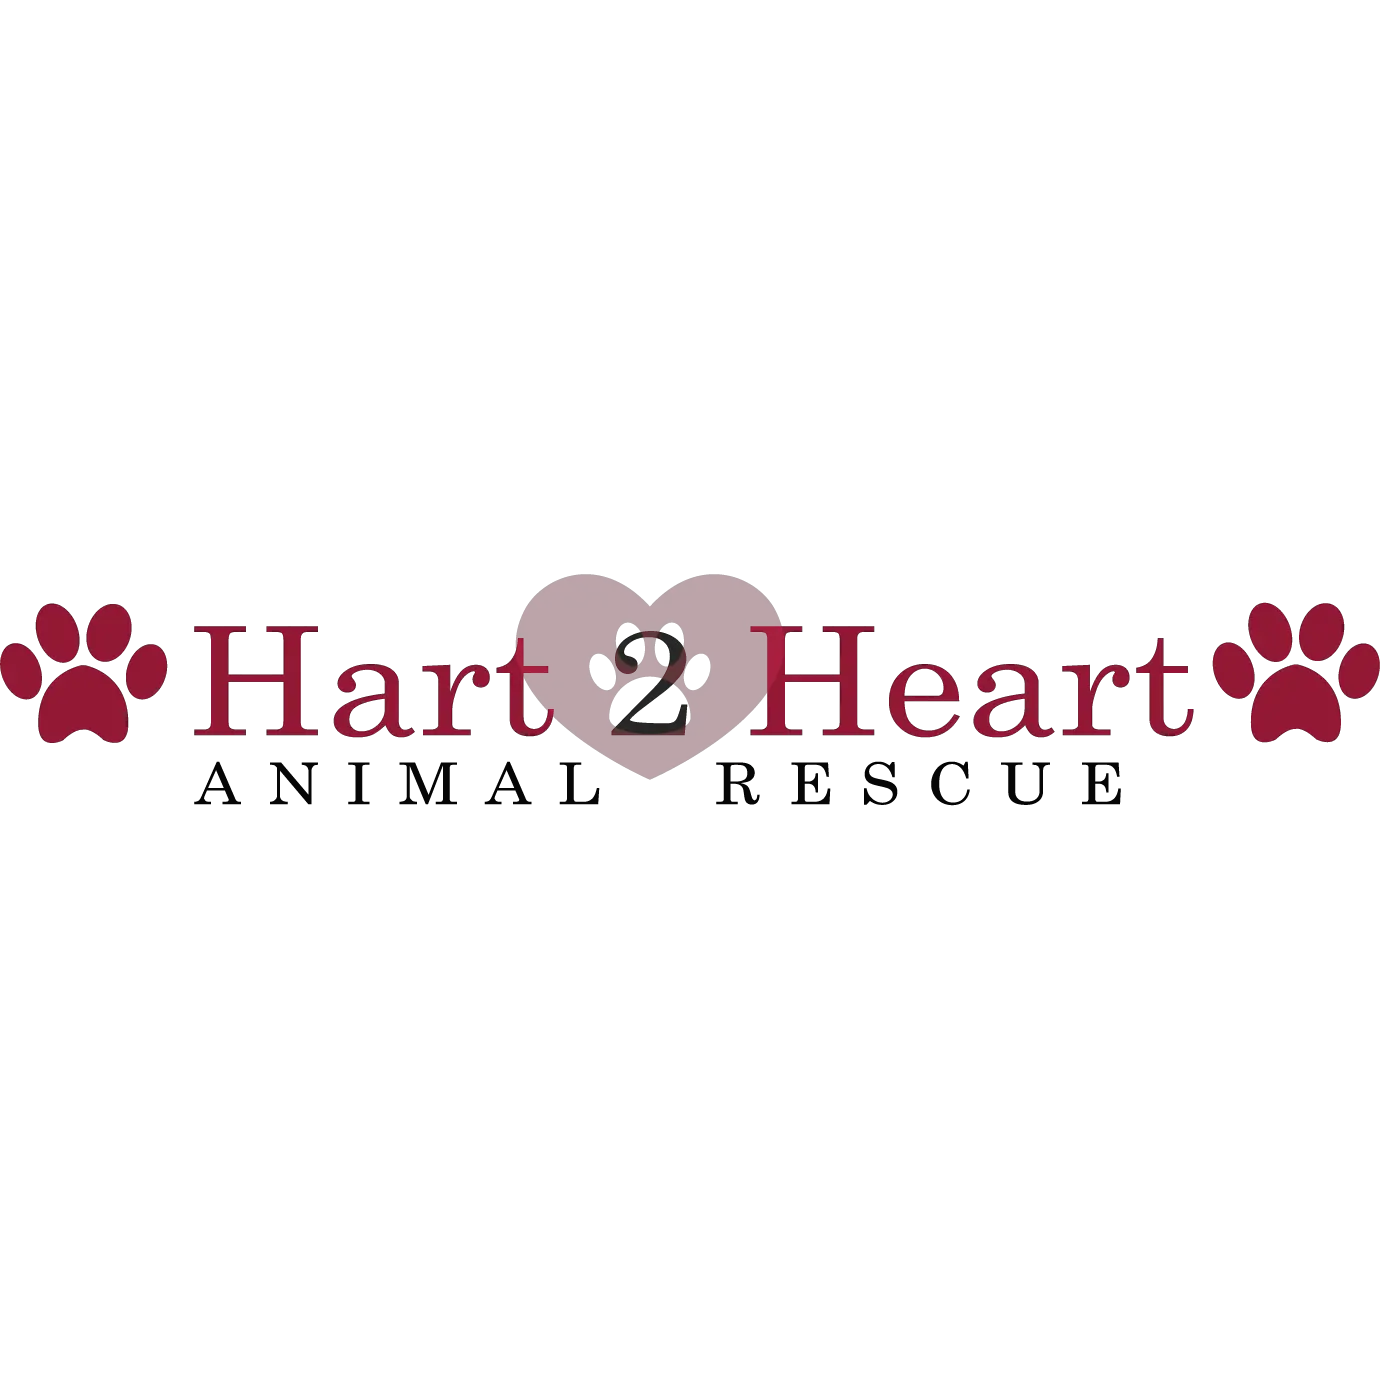 Hart 2 Heart Rescue